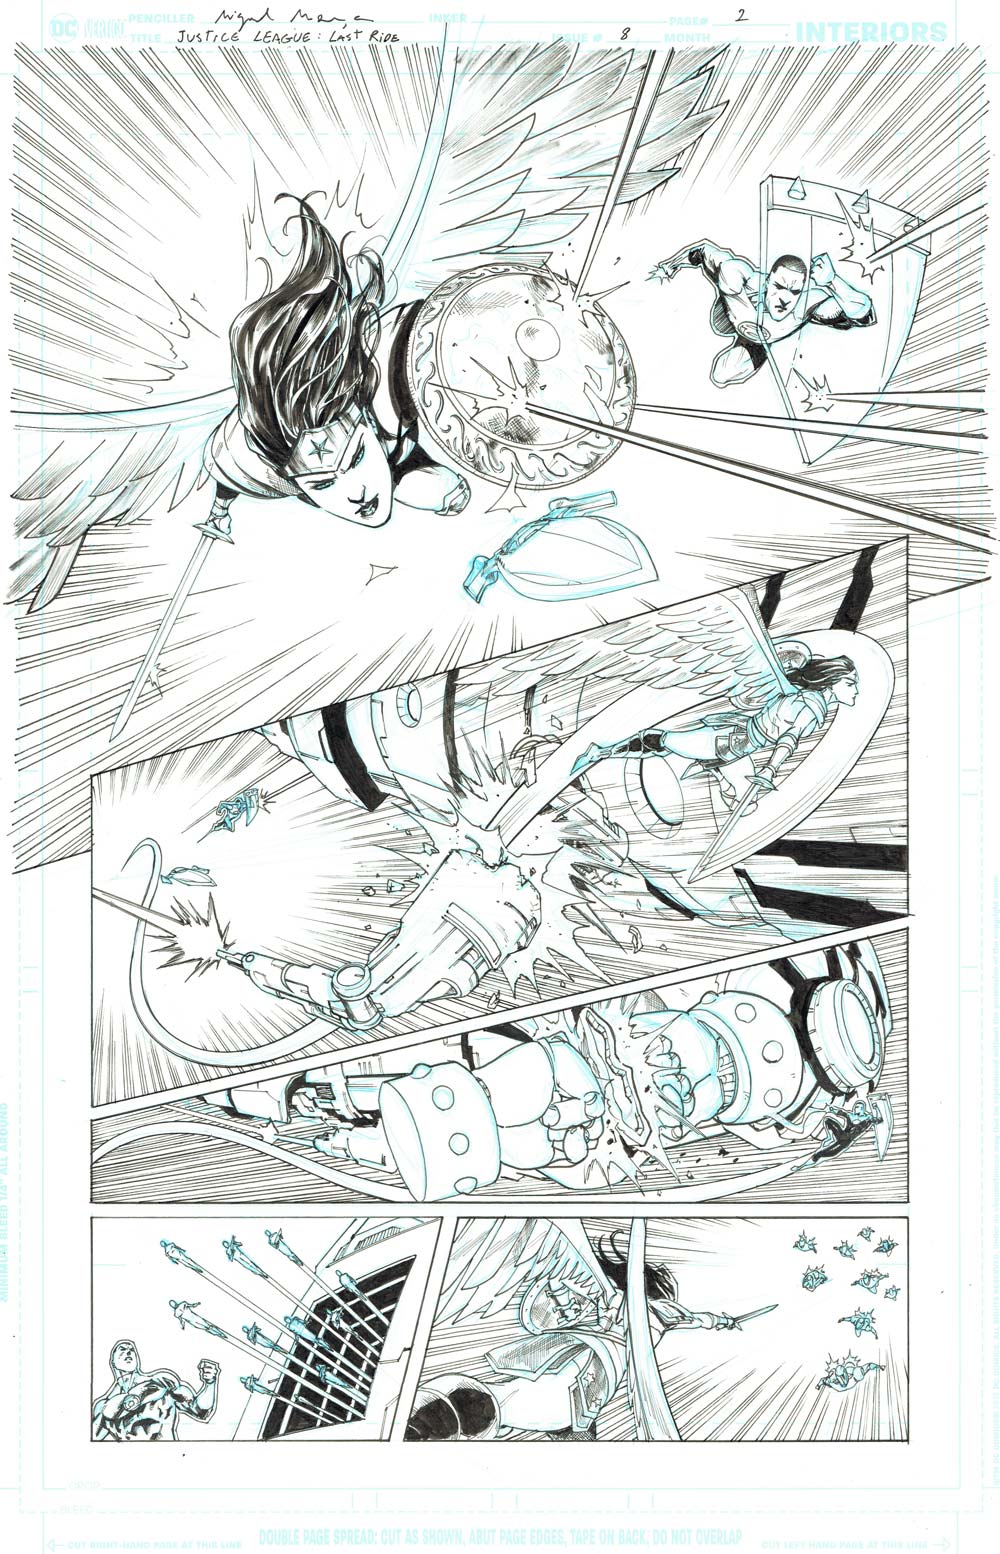 Justice League - Last Ride #4 (Page 12)